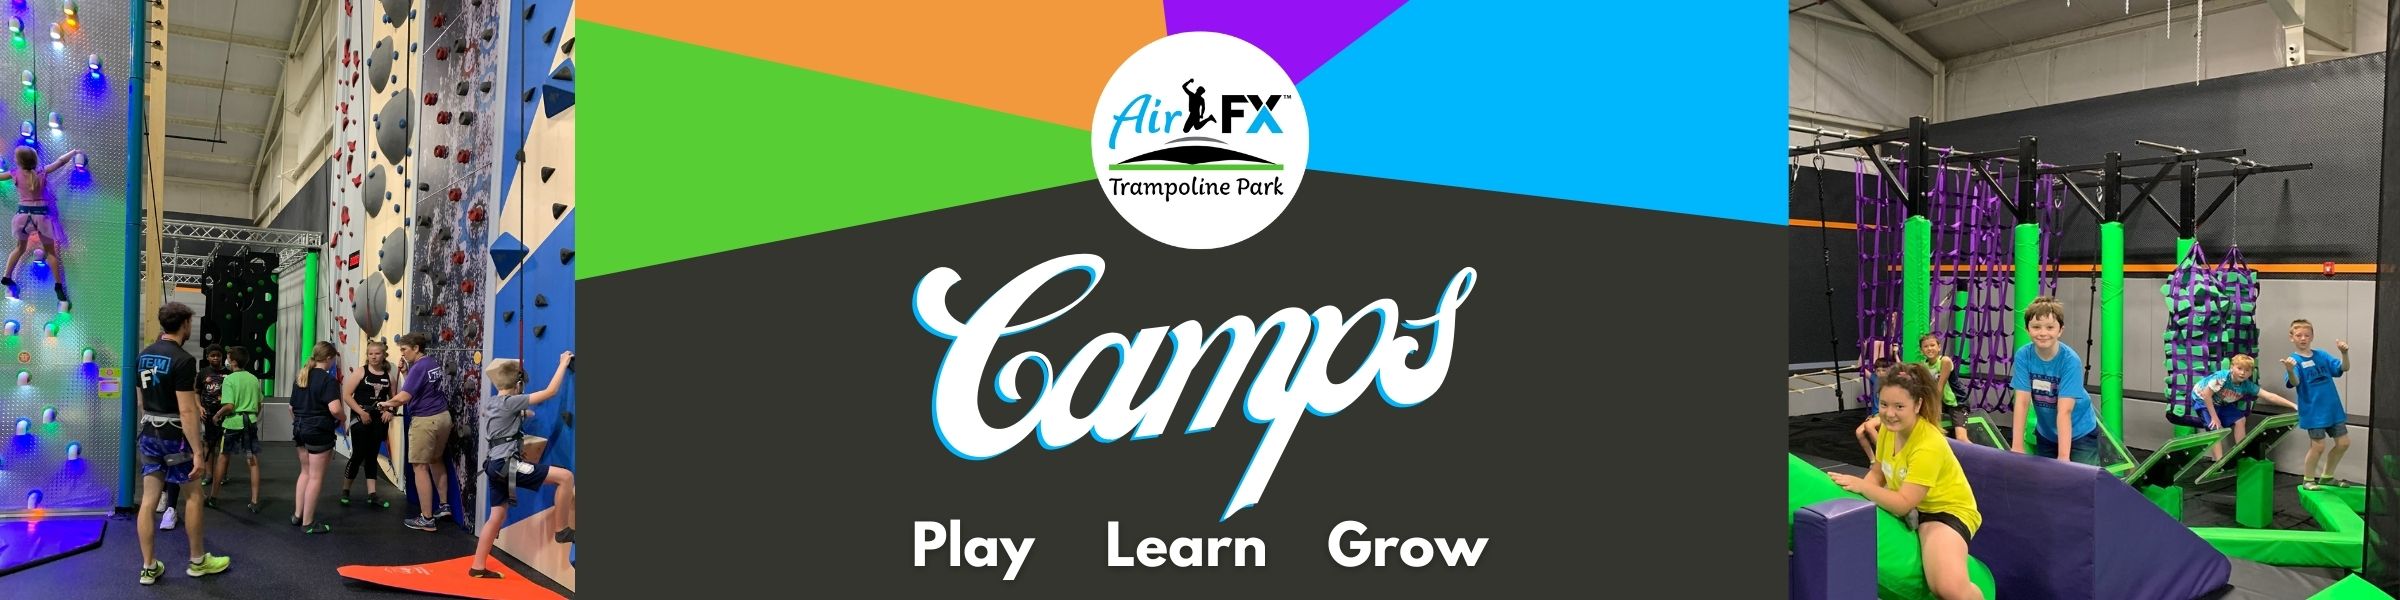 Camps - Play - Learn - Grow